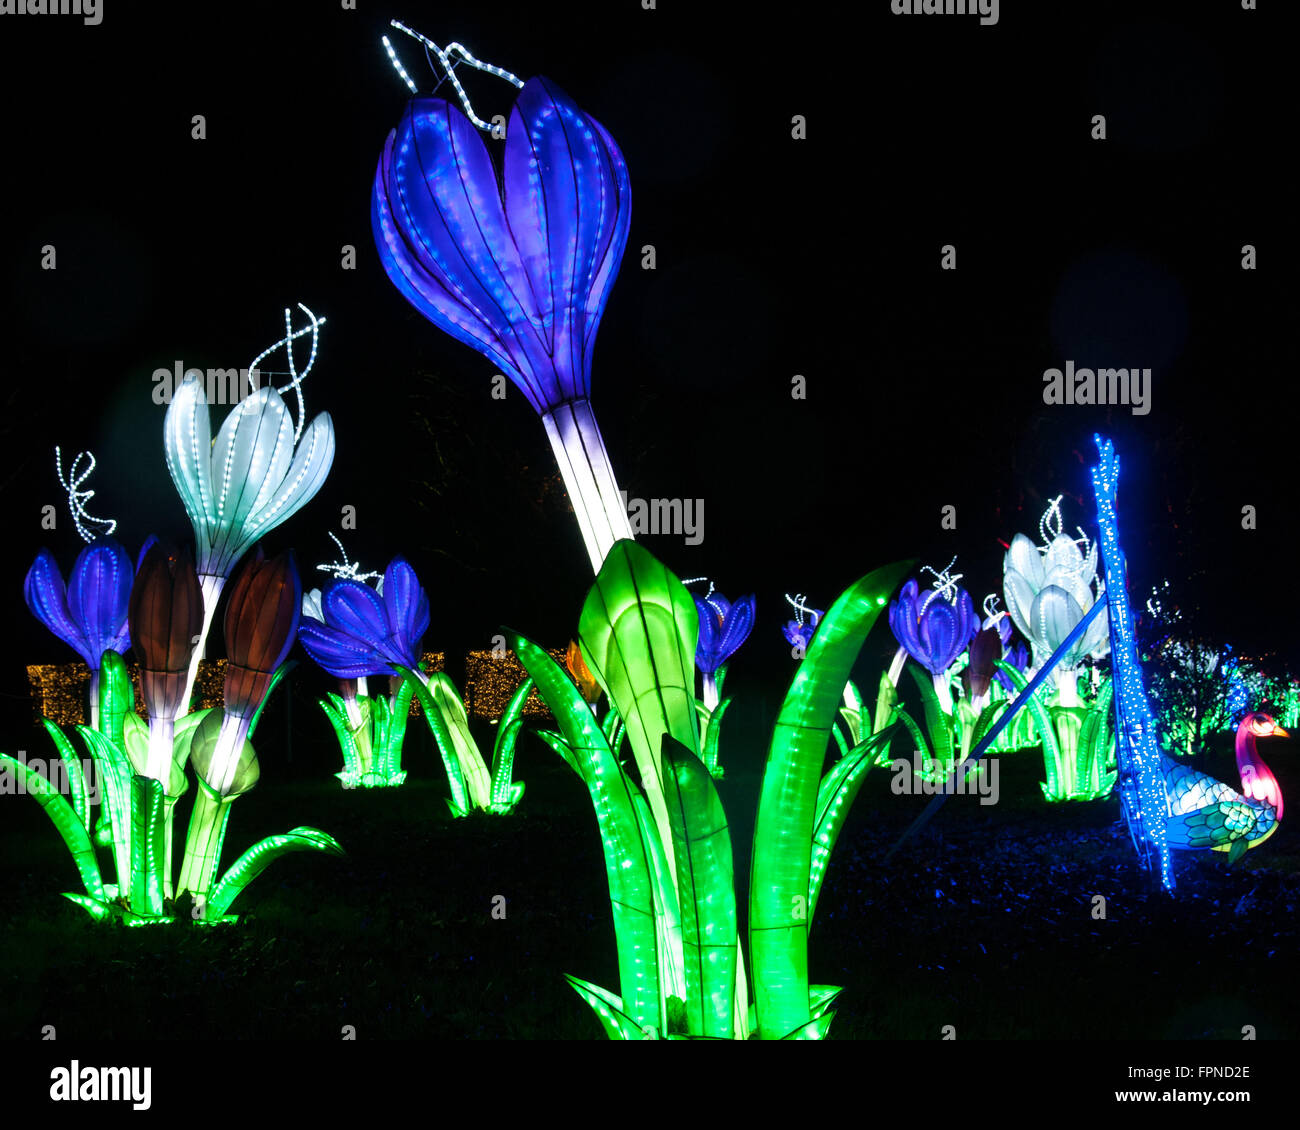 The illuminated blue crocus flowers display christmas xmas seasonal illuminations lighting Kew Gardens, London UK. Stock Photo